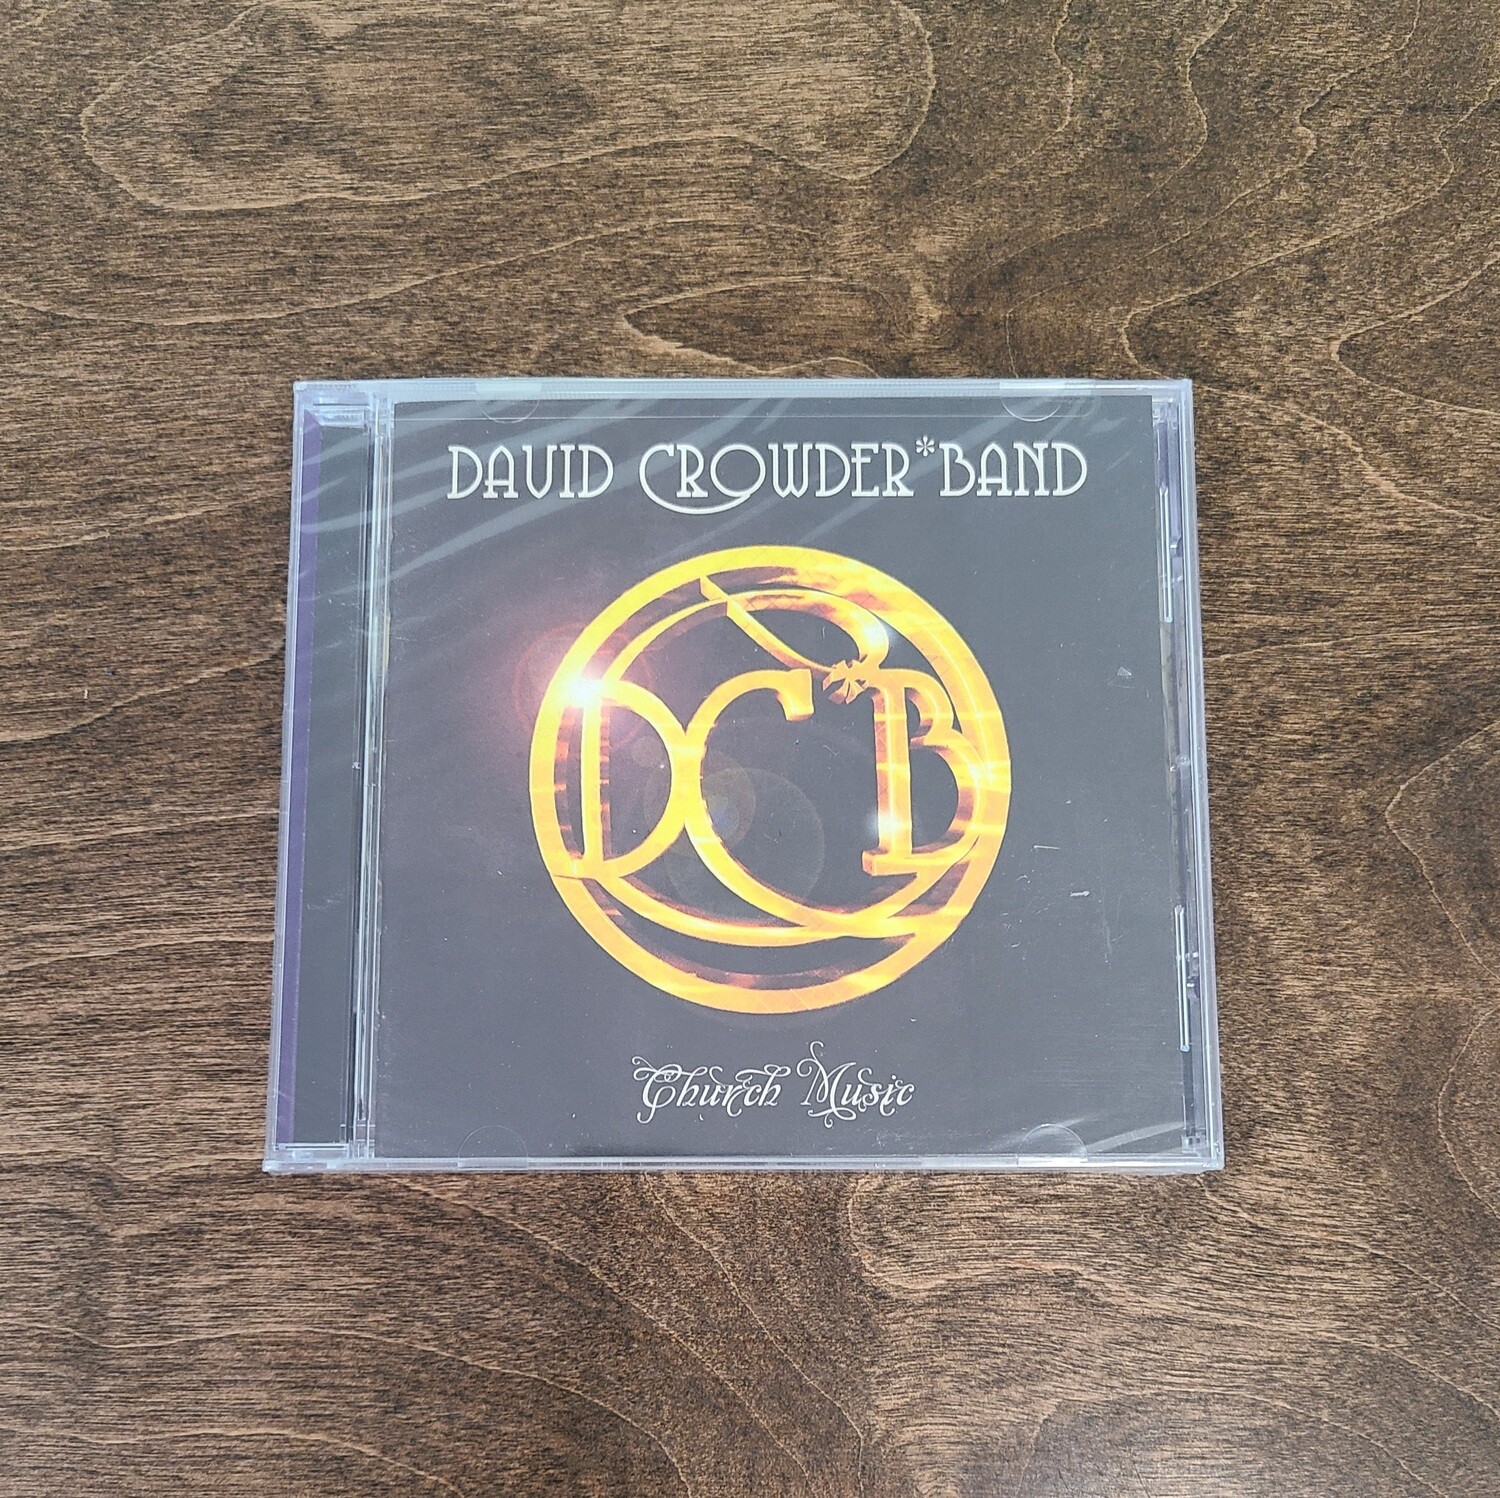 Church Music by David Crowder and Band CD